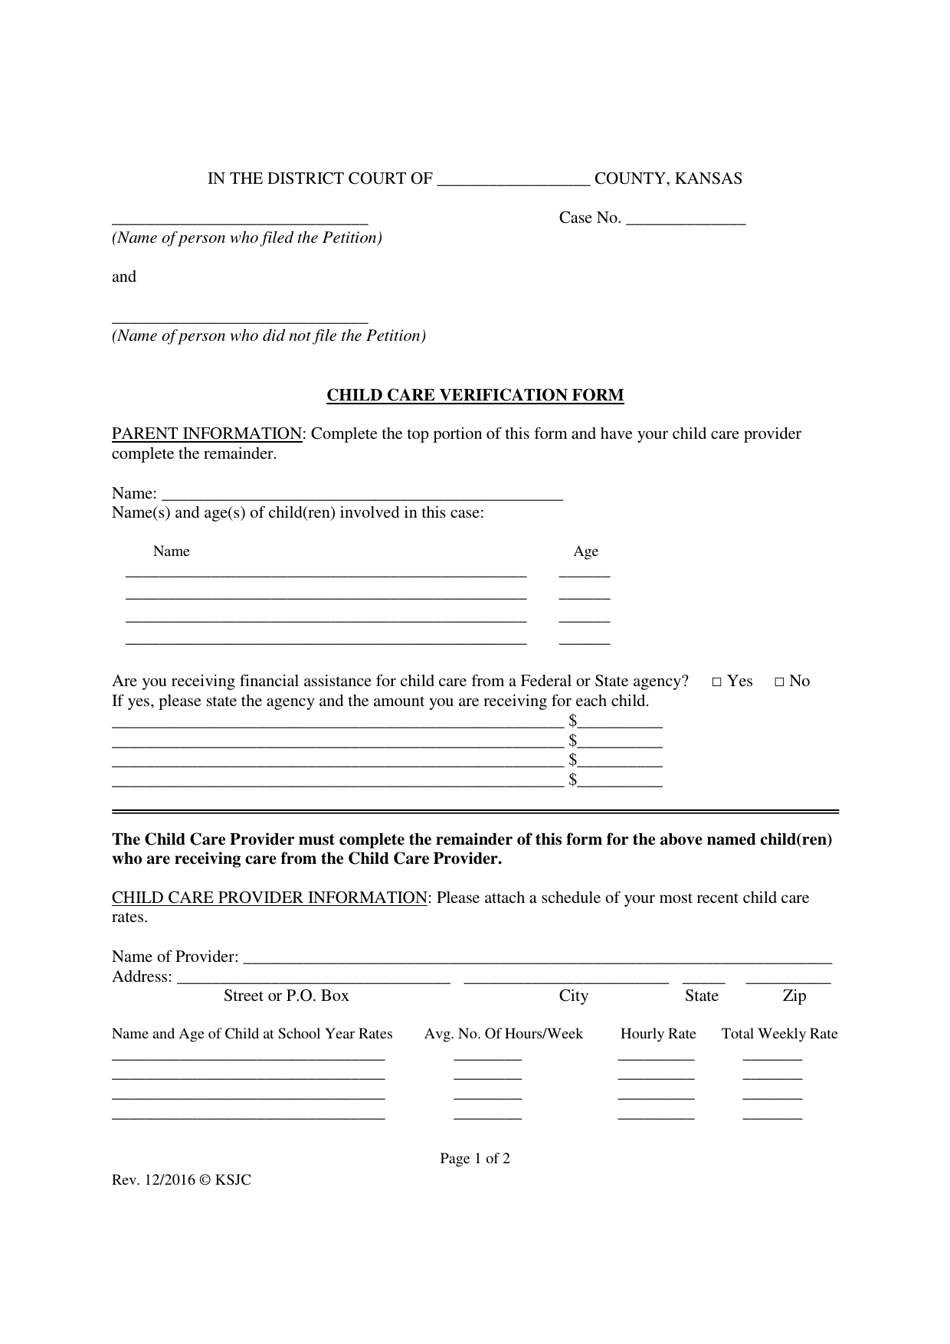 Child Care Verification Form - Kansas, Page 1